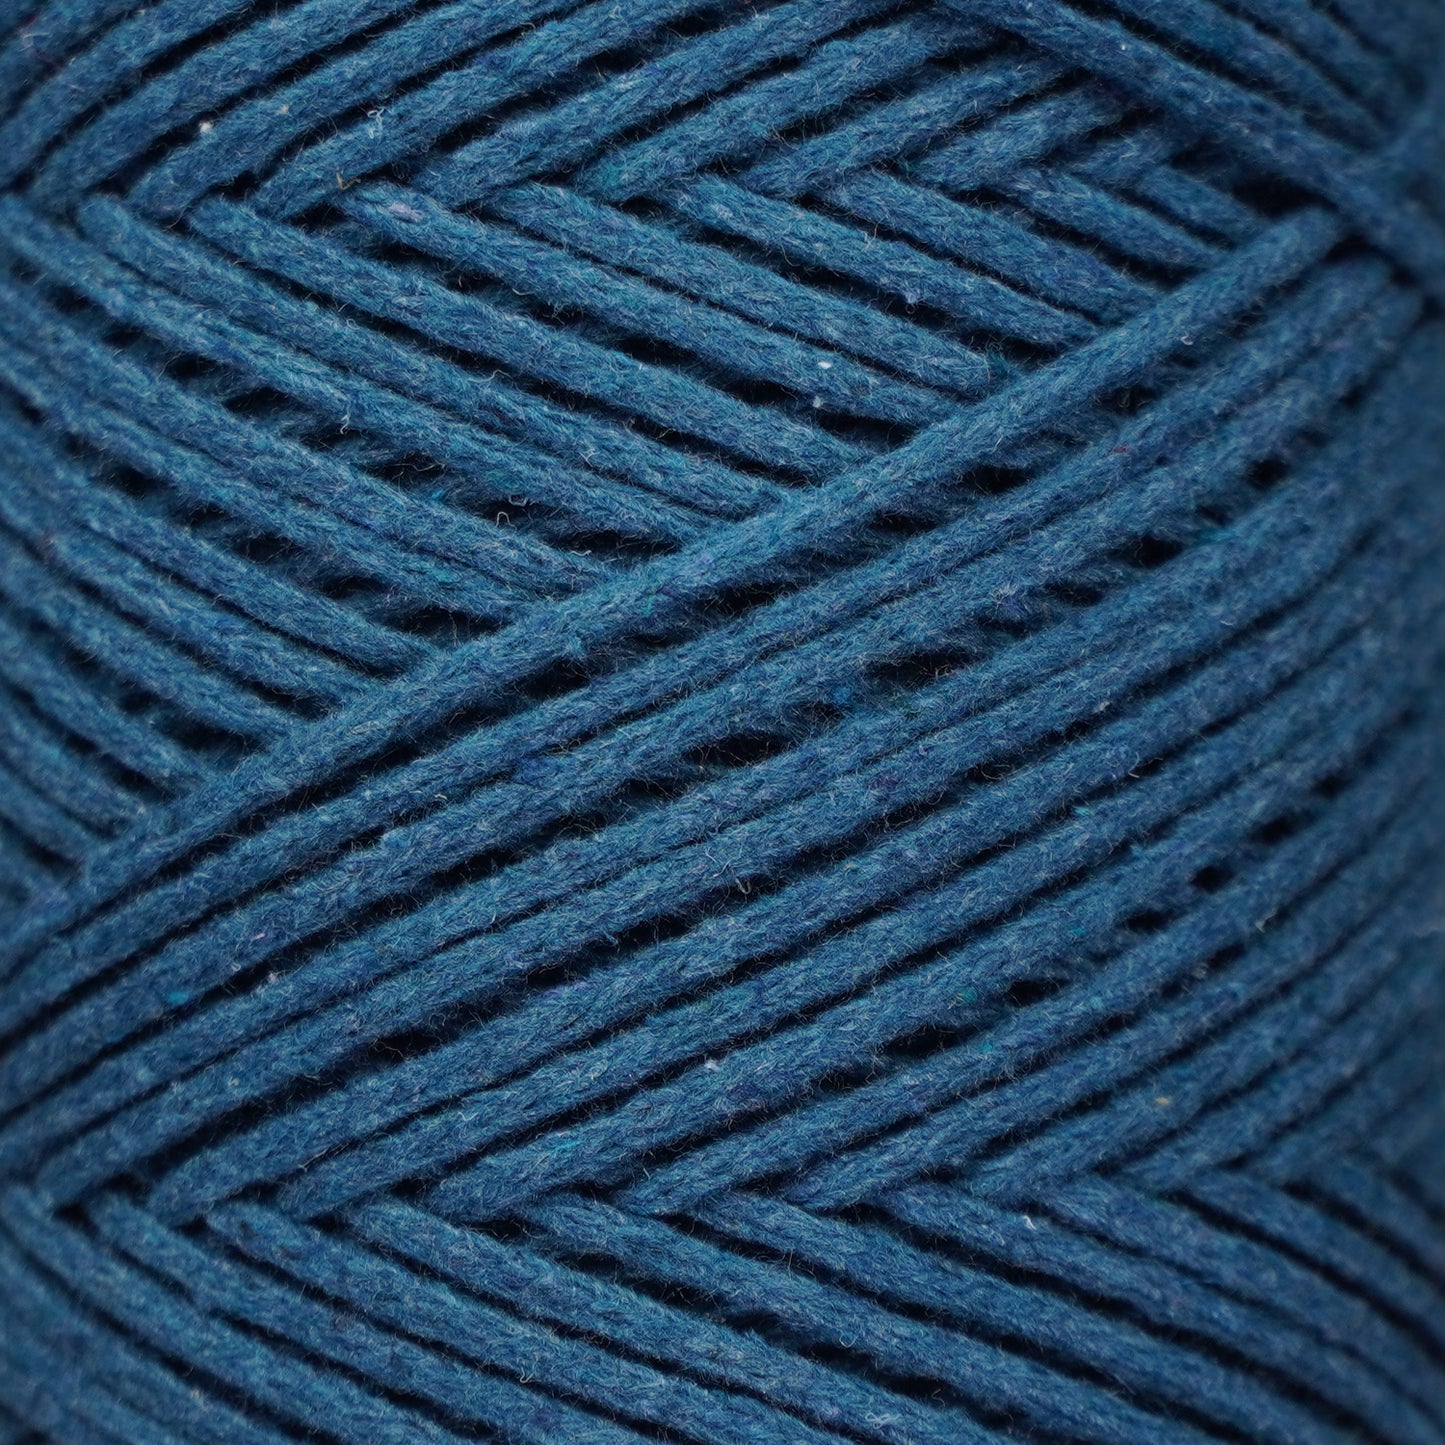 Cotton Macrame Cord 2mm x 195 Yards (590 feet) 2mm - Denim Blue